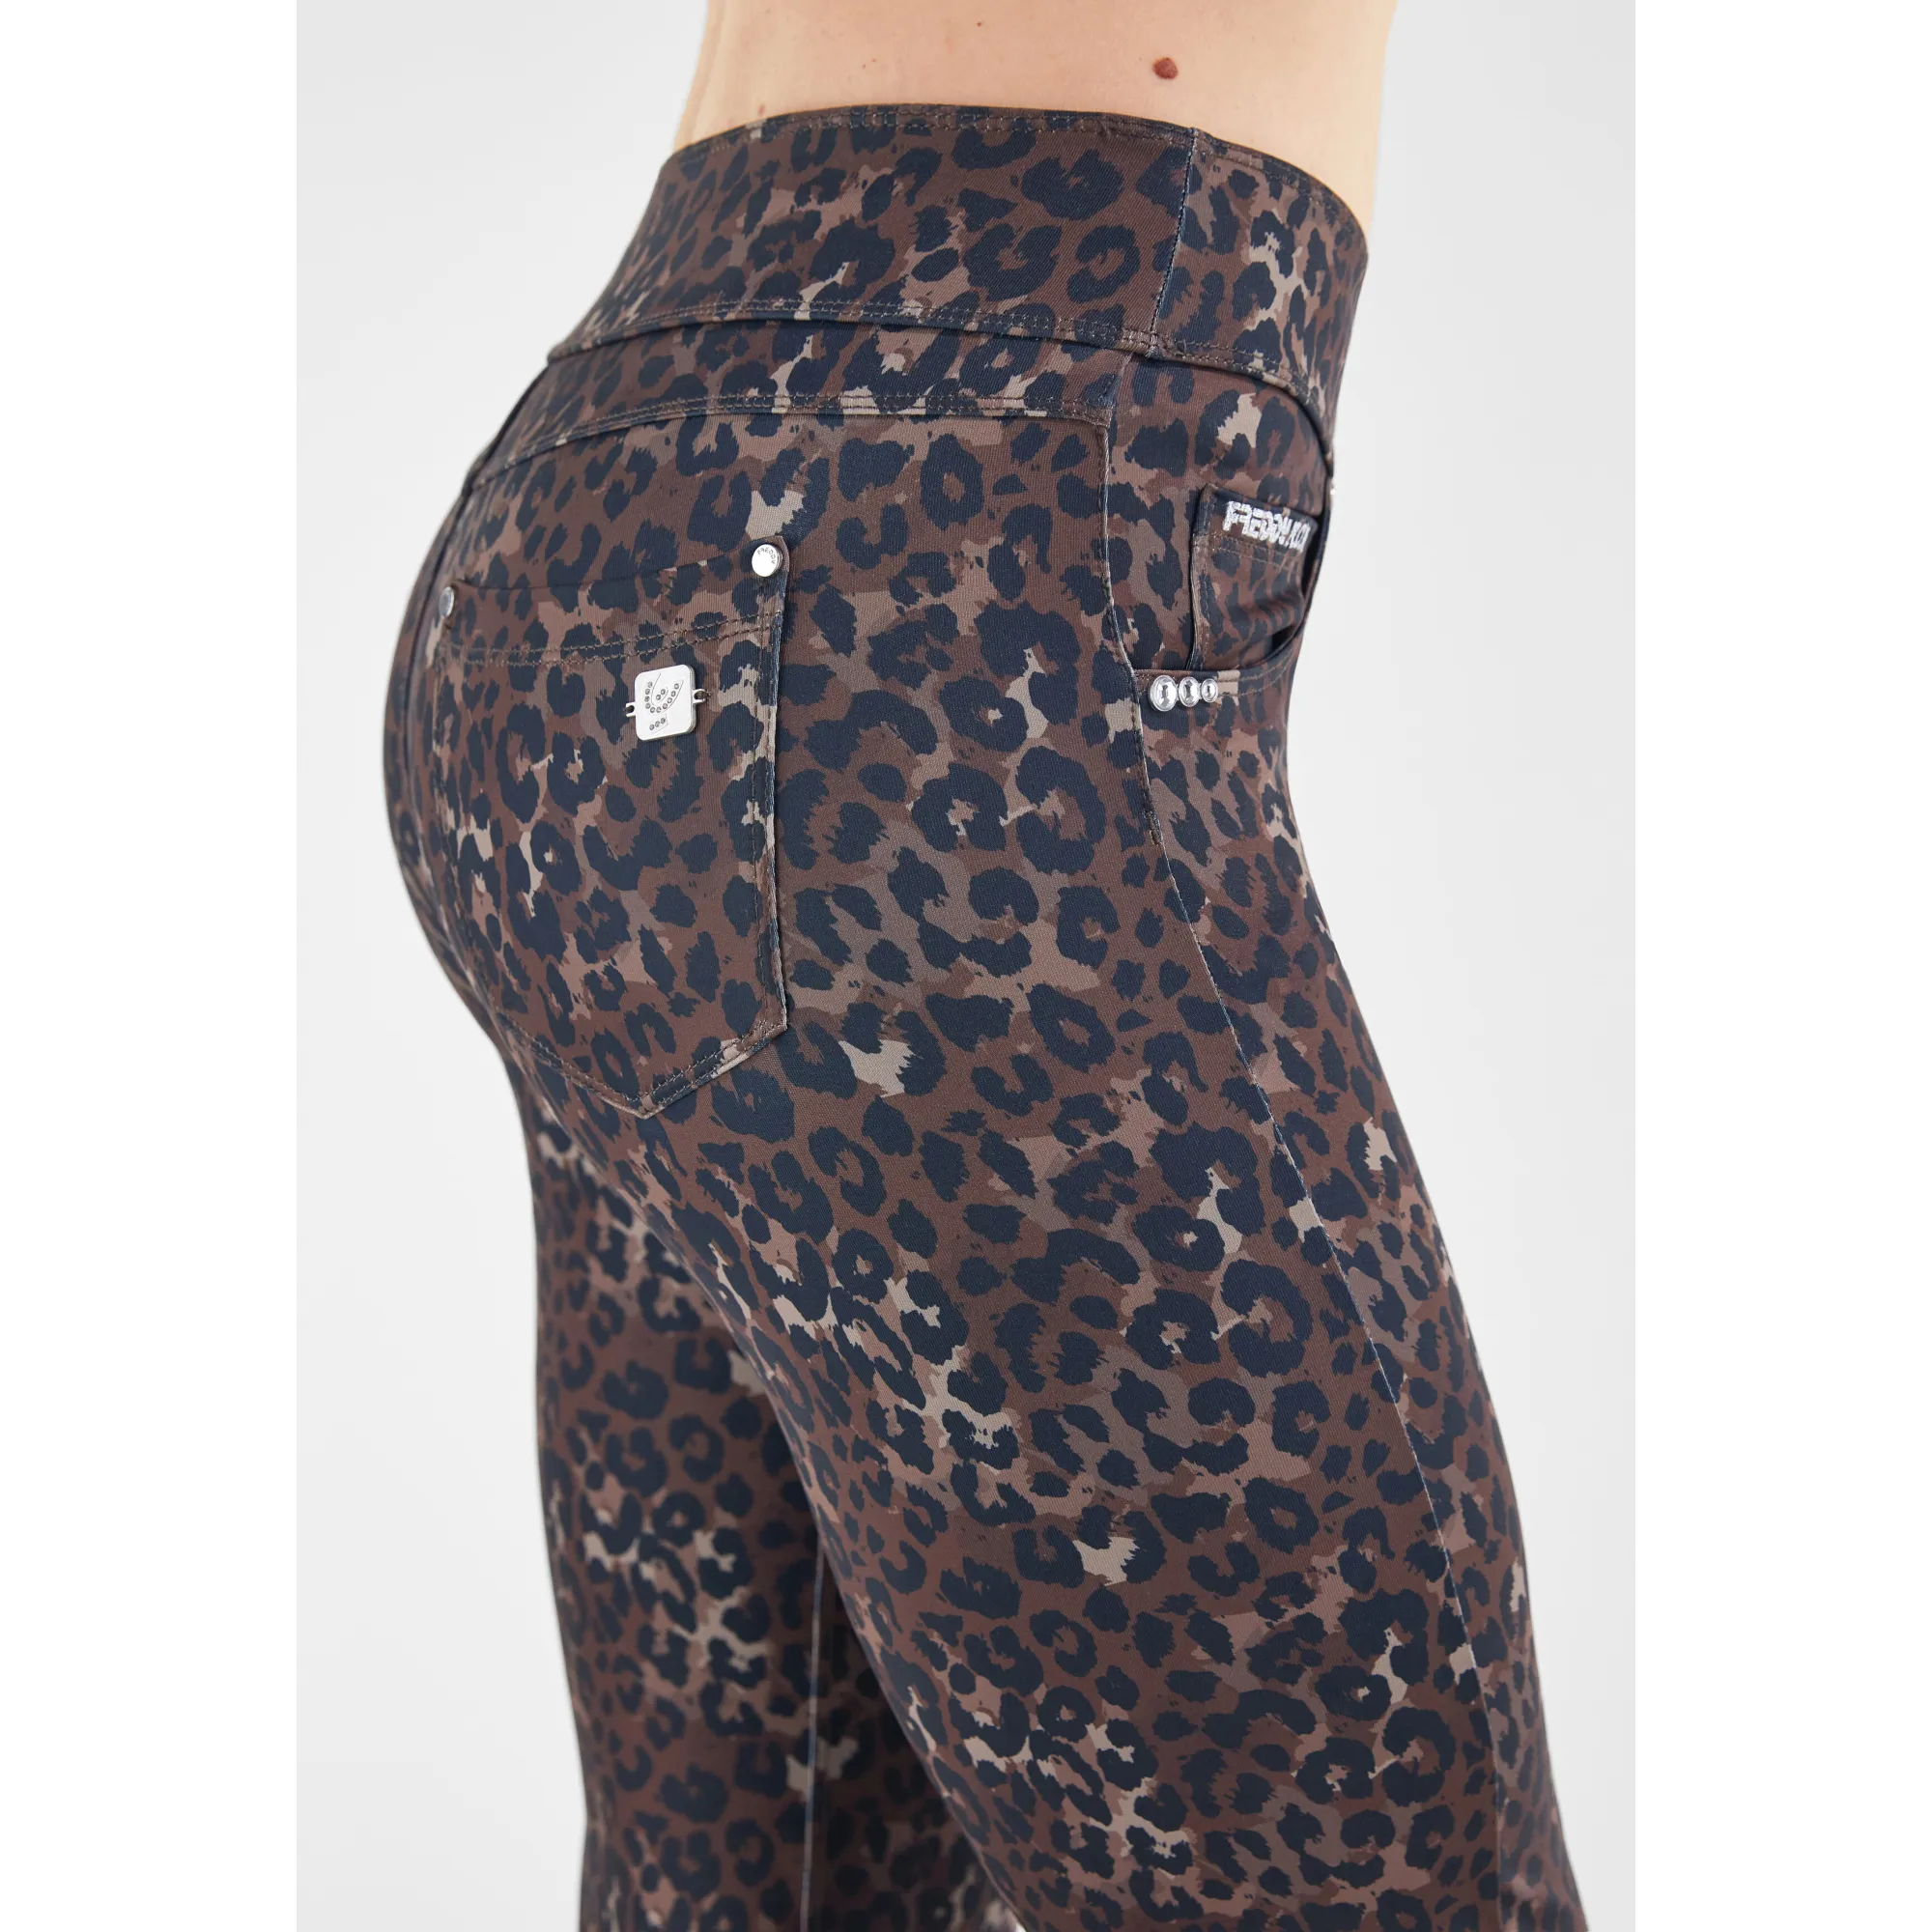 - - Damen Comfort Tech Taillenbund Yoga Leoparden- Freddy Braun - Mid umschlagbarer - Leg Wide Hose Waist N.O.W.®